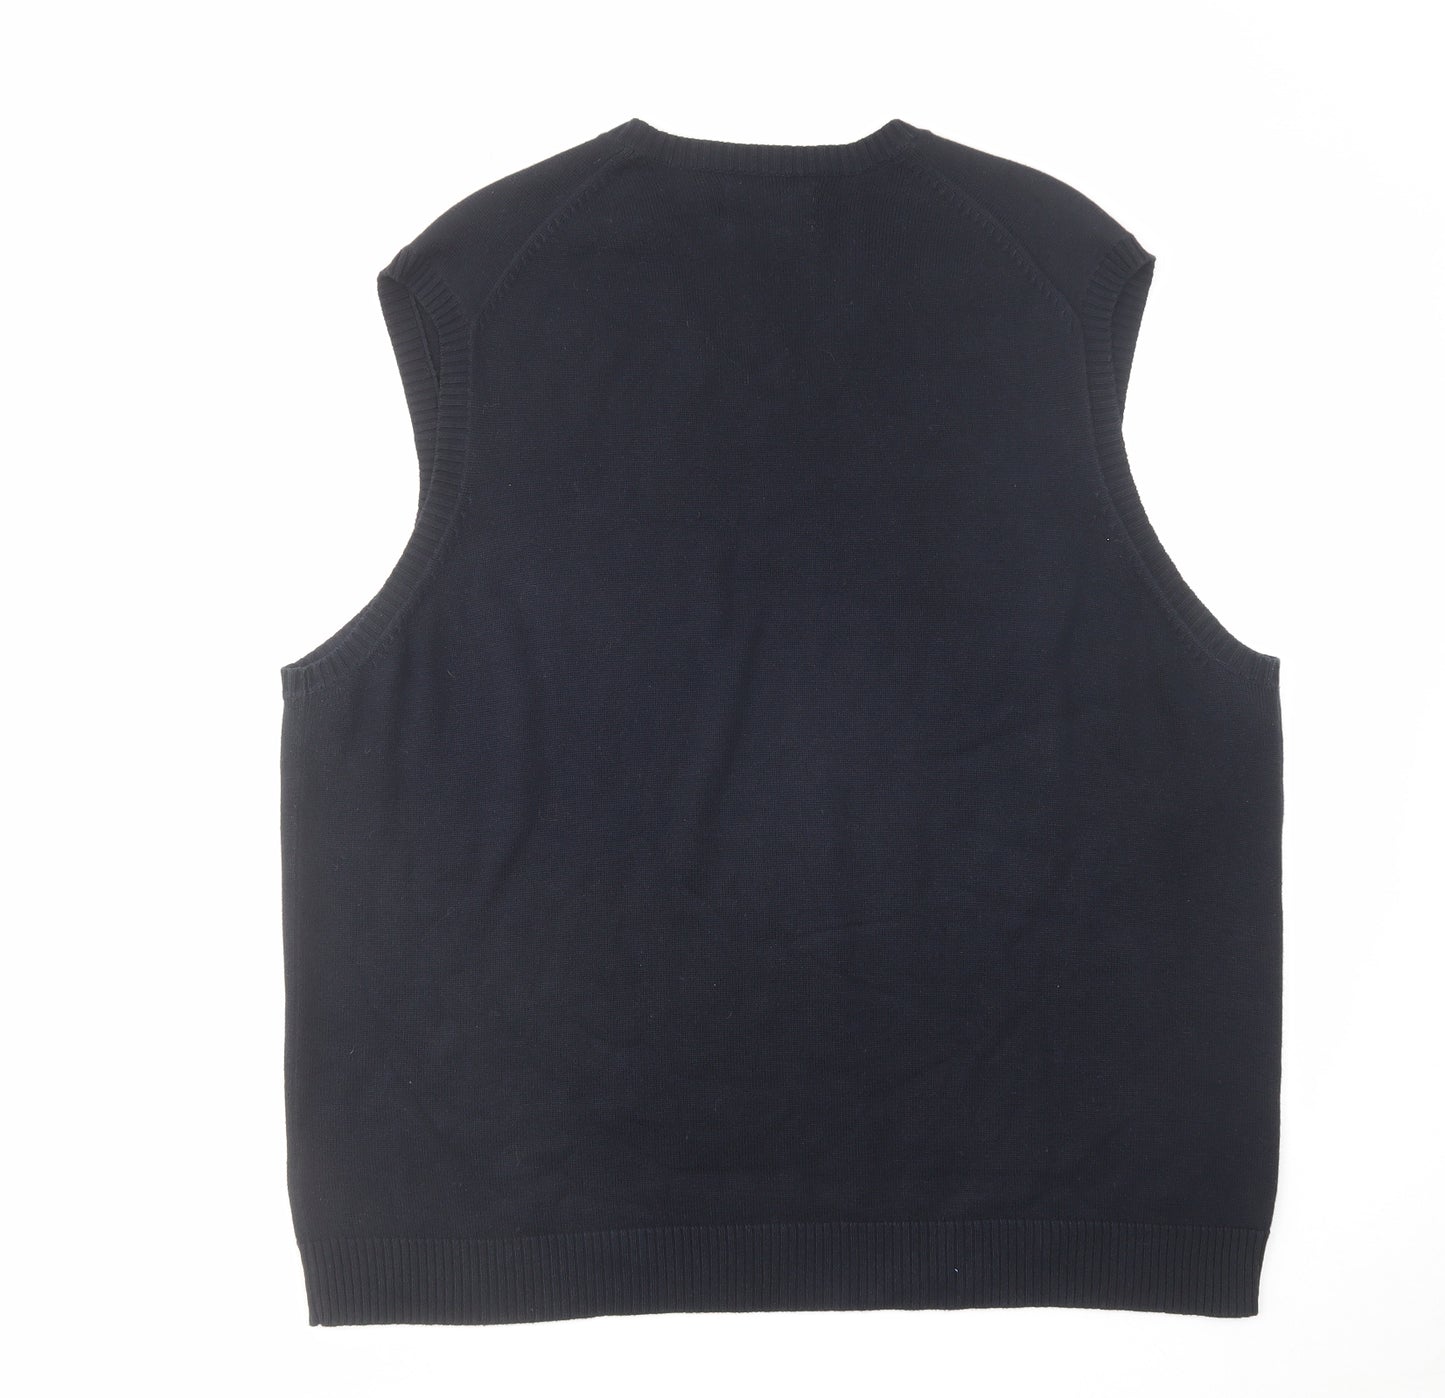 Blue Harbour Mens Blue V-Neck Cotton Vest Jumper Size 2XL Sleeveless